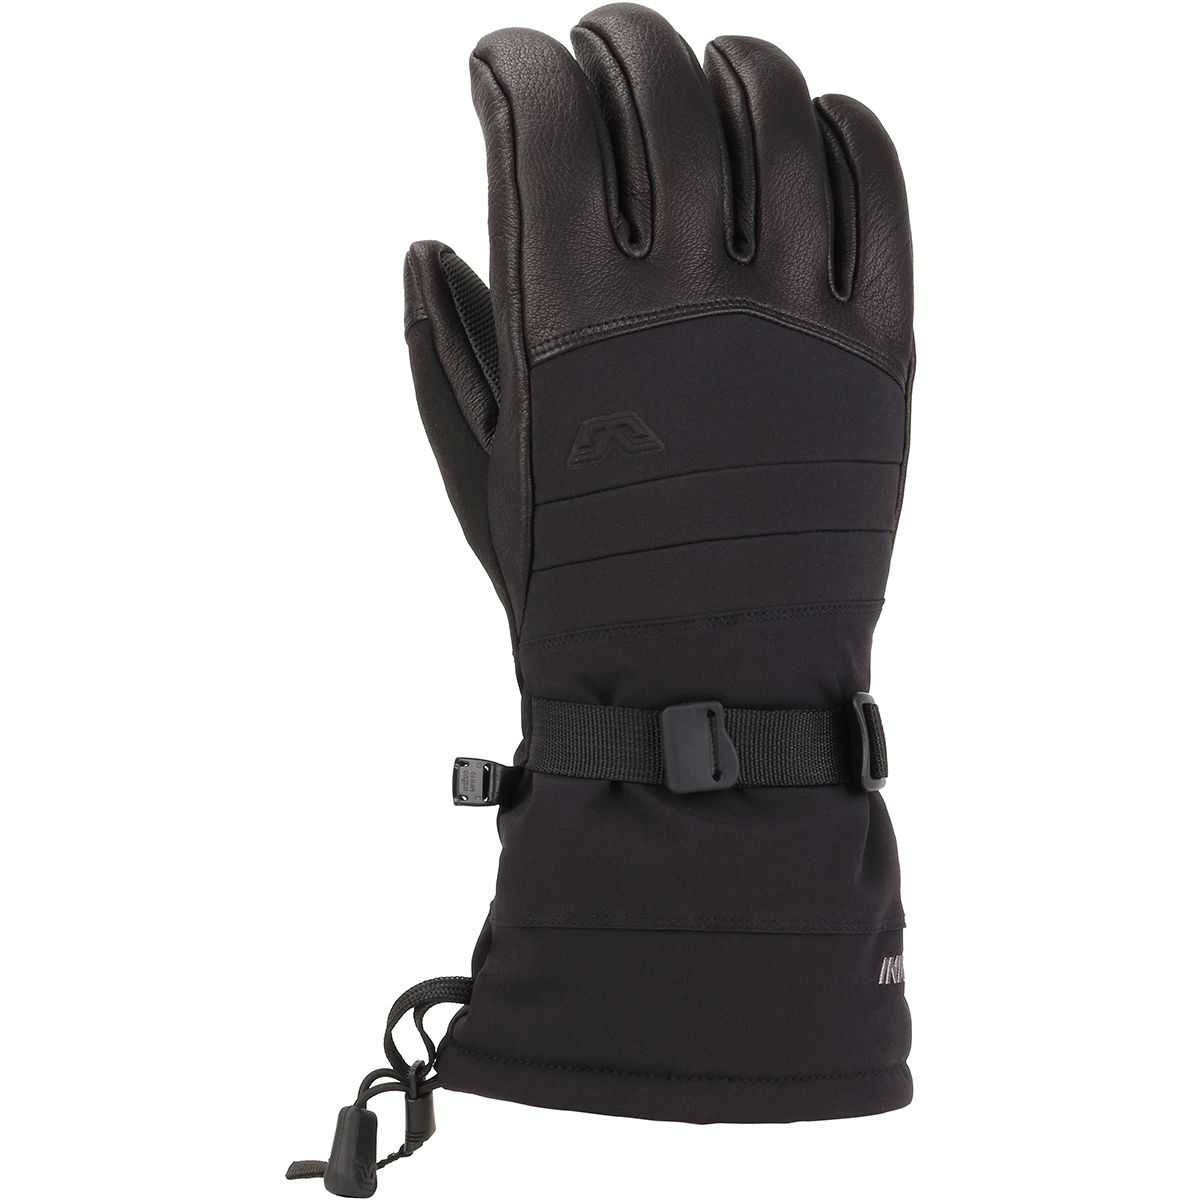 Gordini Polar II Glove - Men's Black